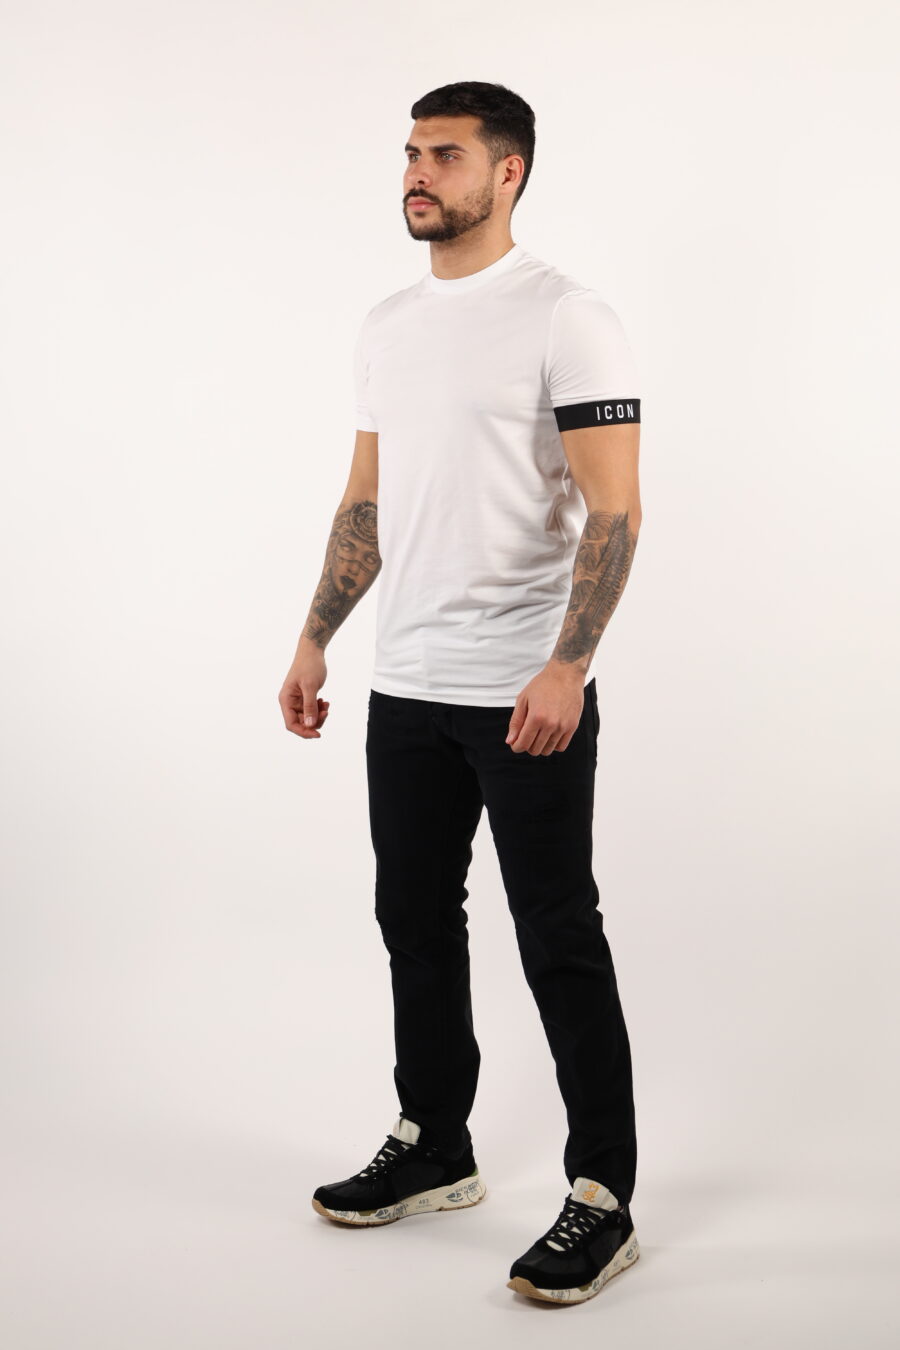 Camiseta blanca con logo negro - 109168